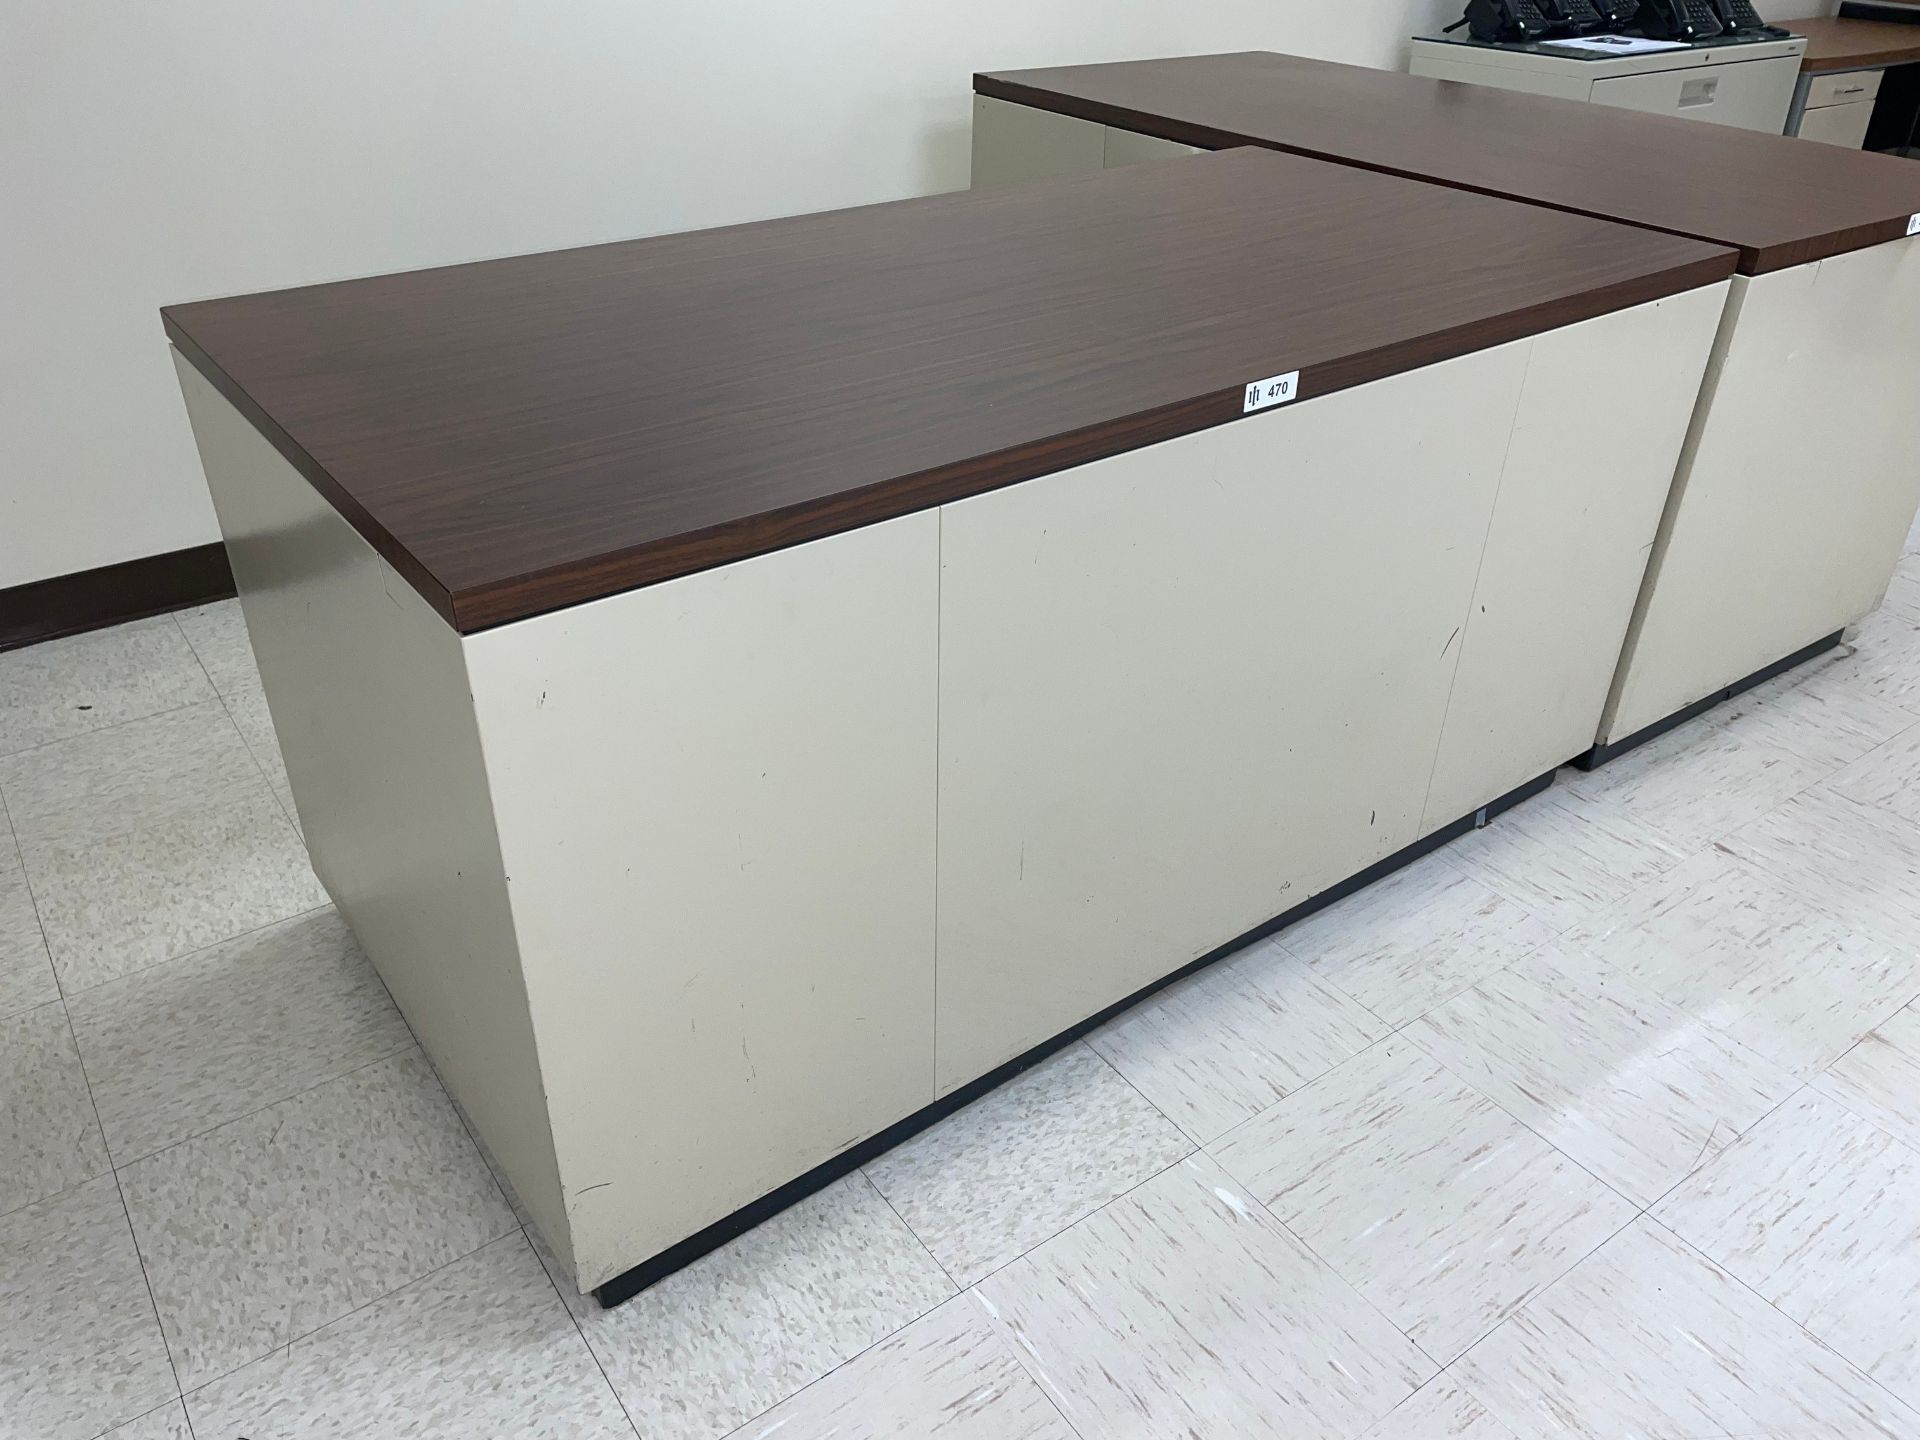 Steelcase Double Pedestal Desk - Image 2 of 2